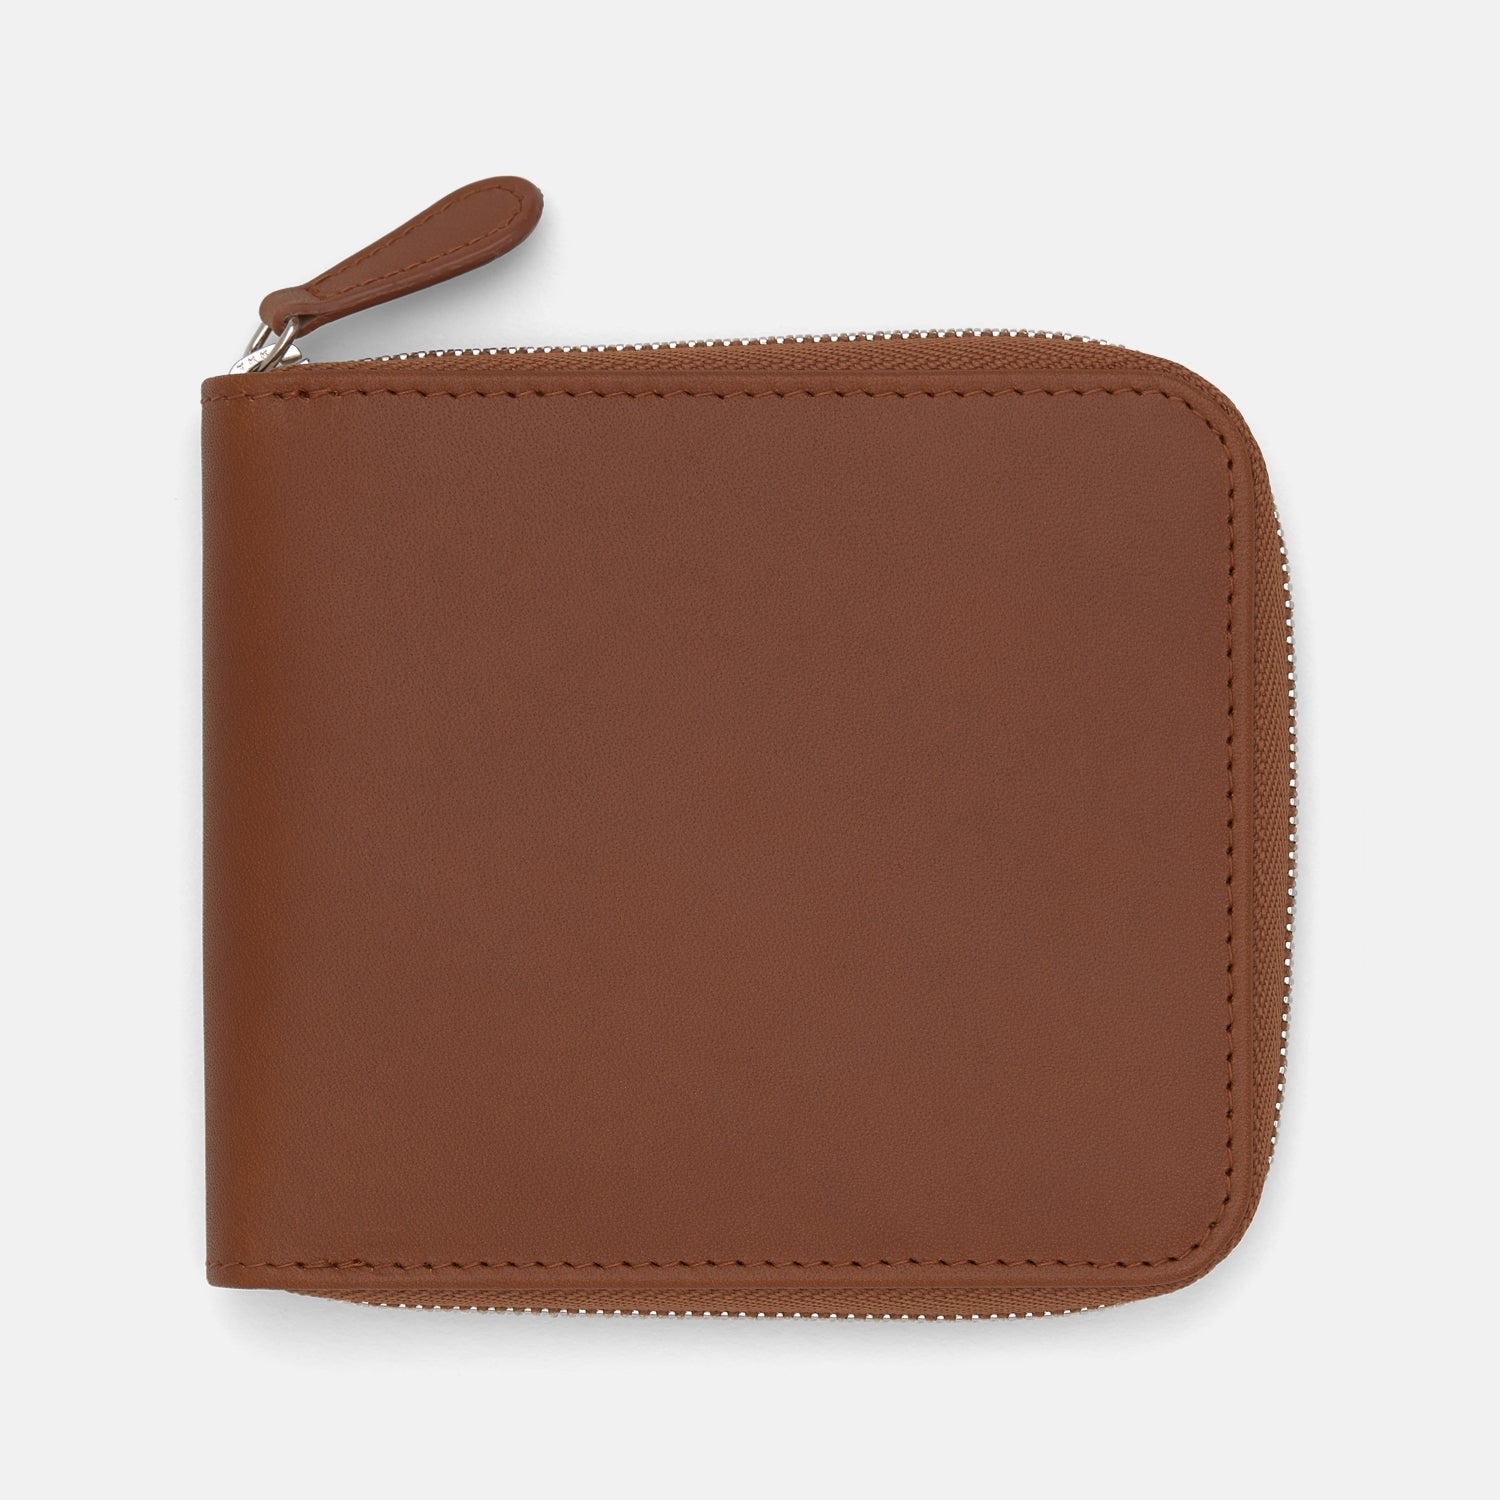 Light Tan Leather 8 C/C Zipped Wallet